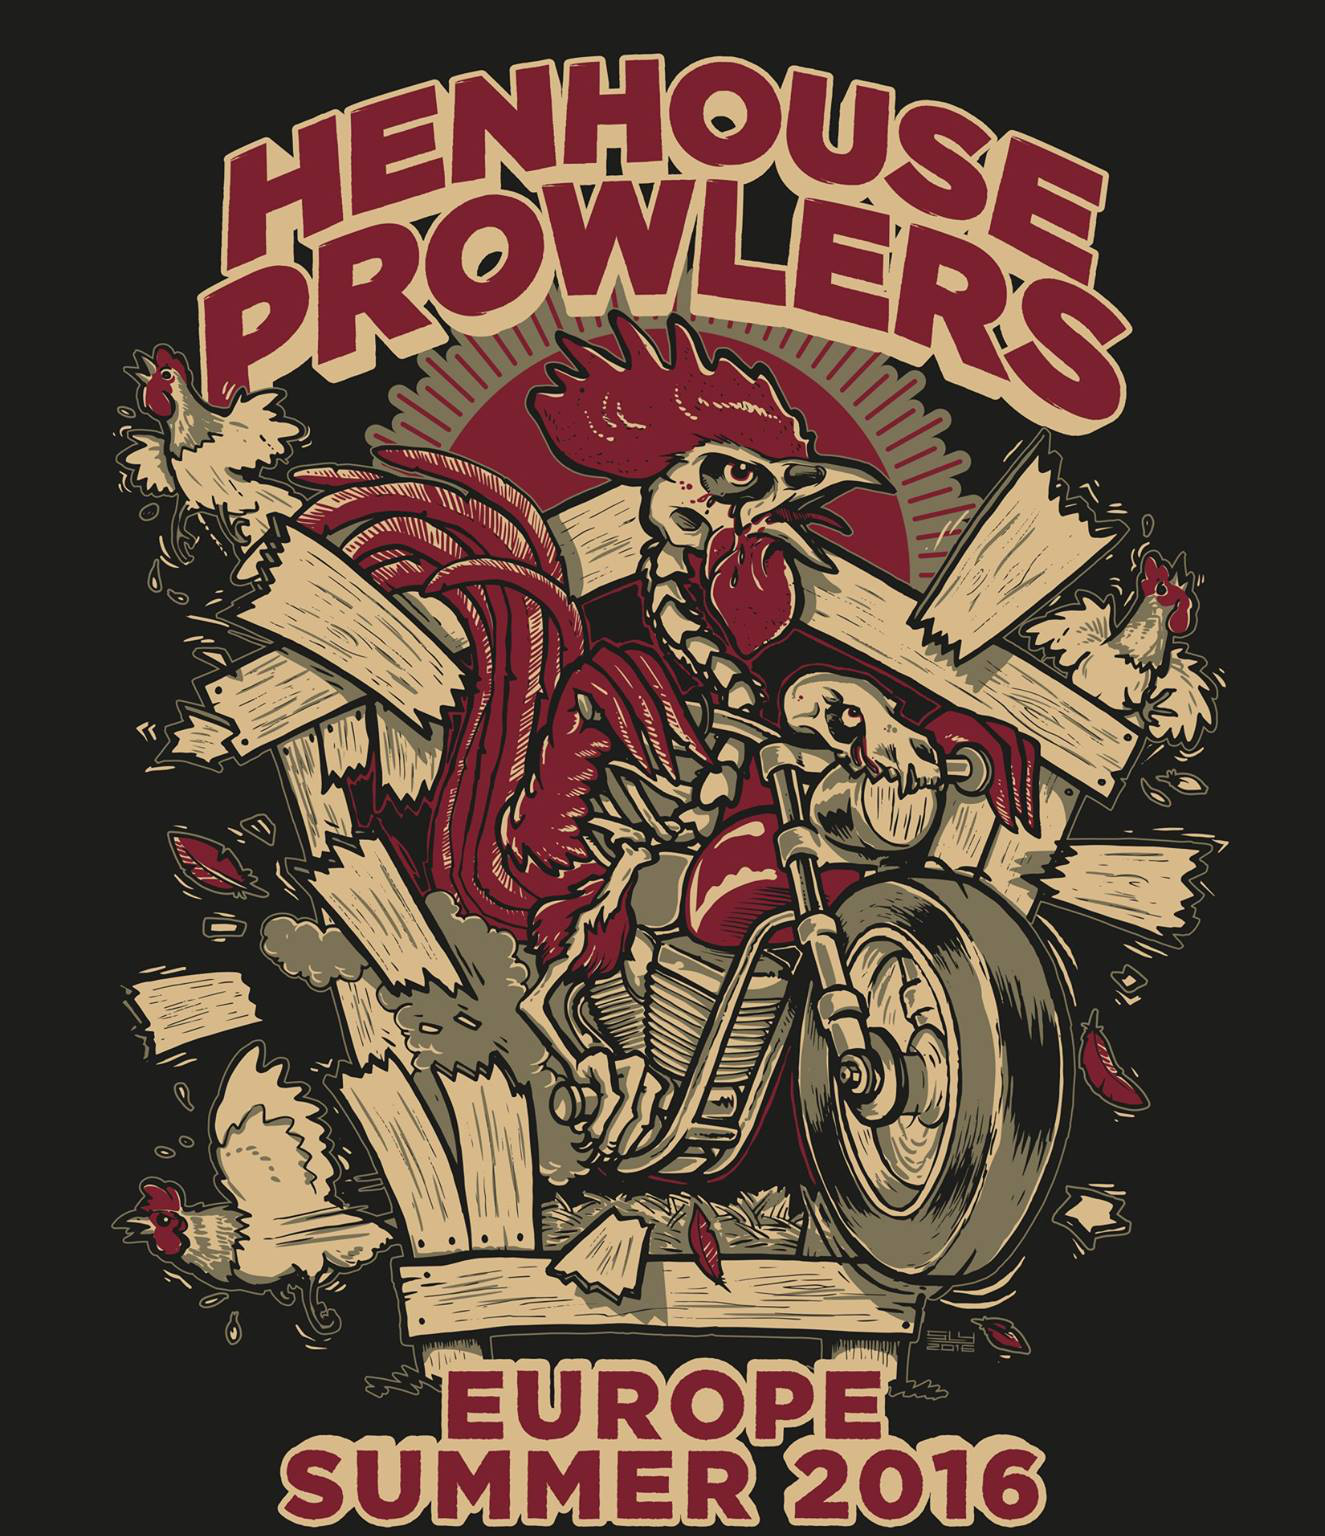 Henhouse Prowlers kick off European tour this weekend